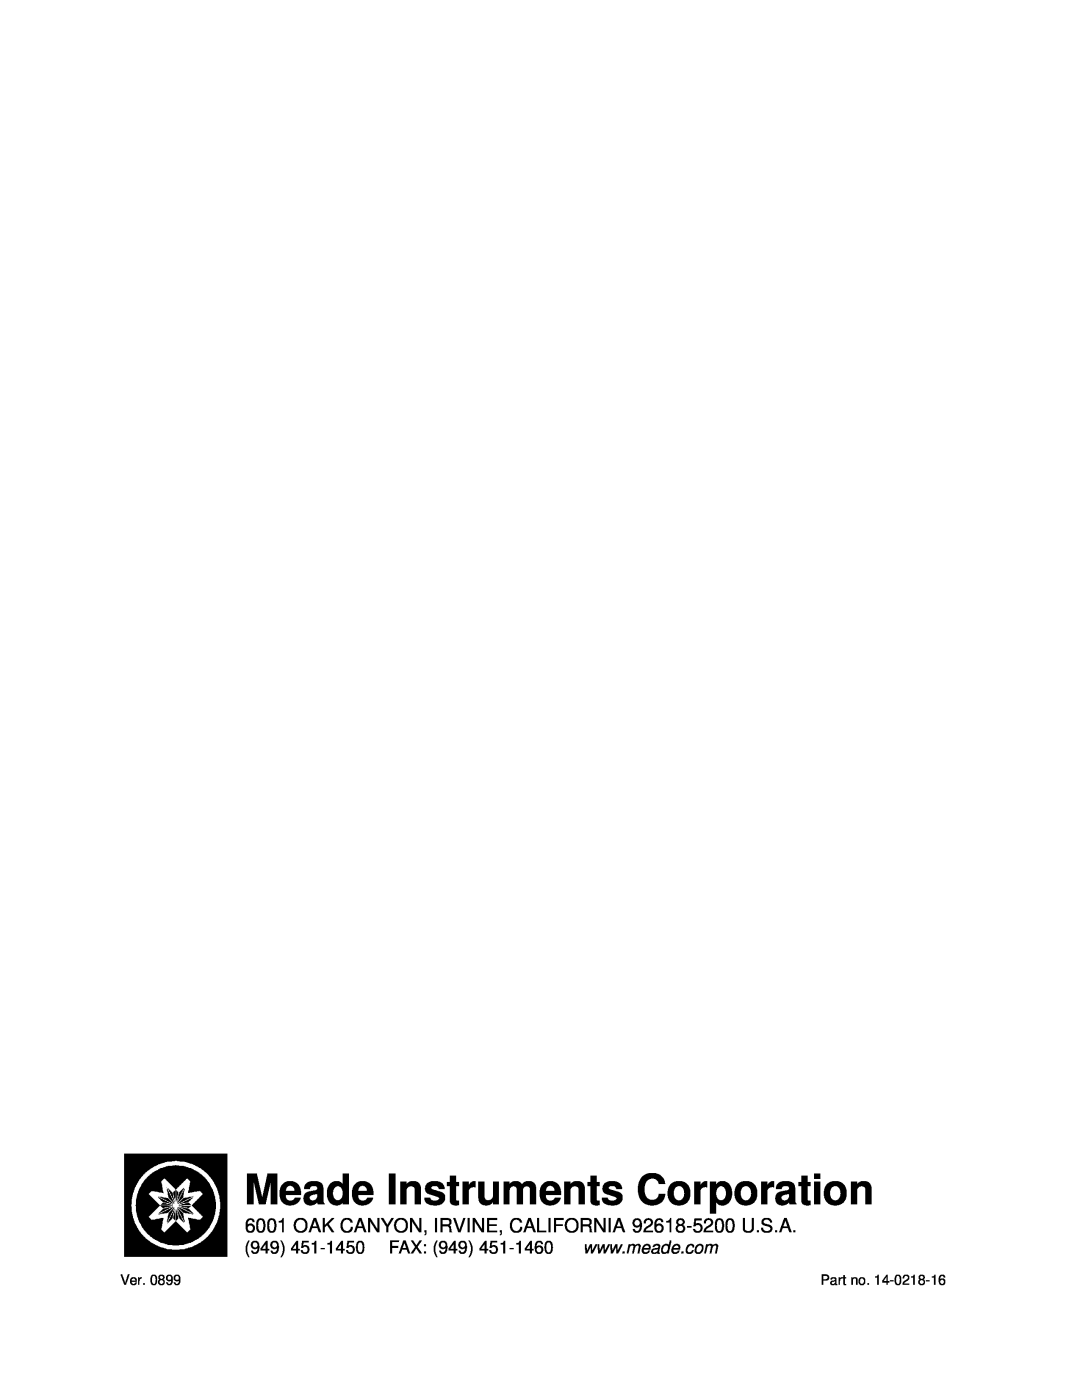 Meade 16 instruction manual Meade Instruments Corporation, Ver 